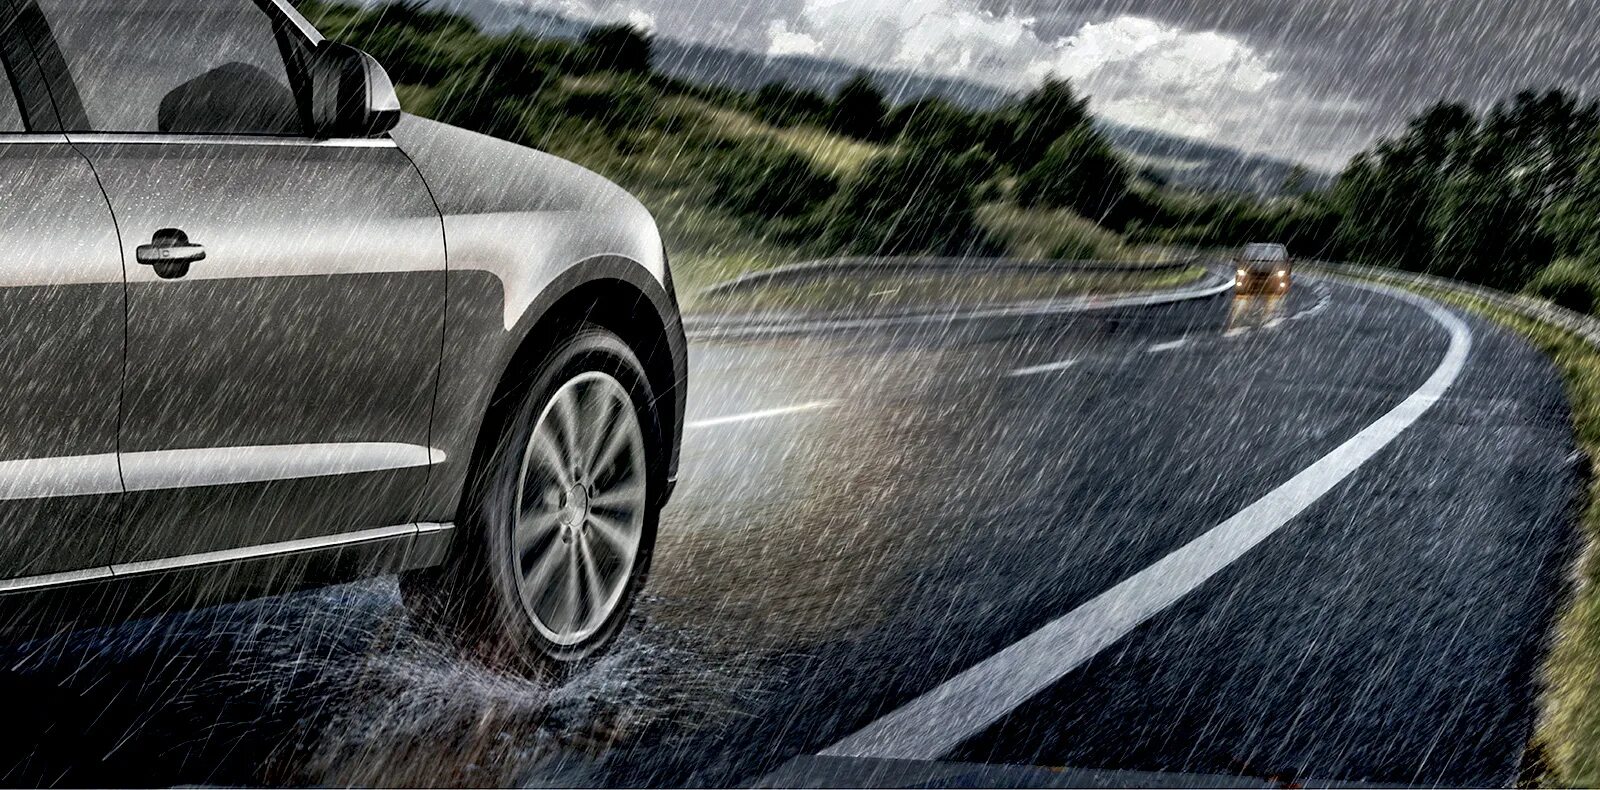 Driver rain. Мокрый асфальт машина. Мокрая дорога. Дорога дождь. Машина на мокрой дороге.